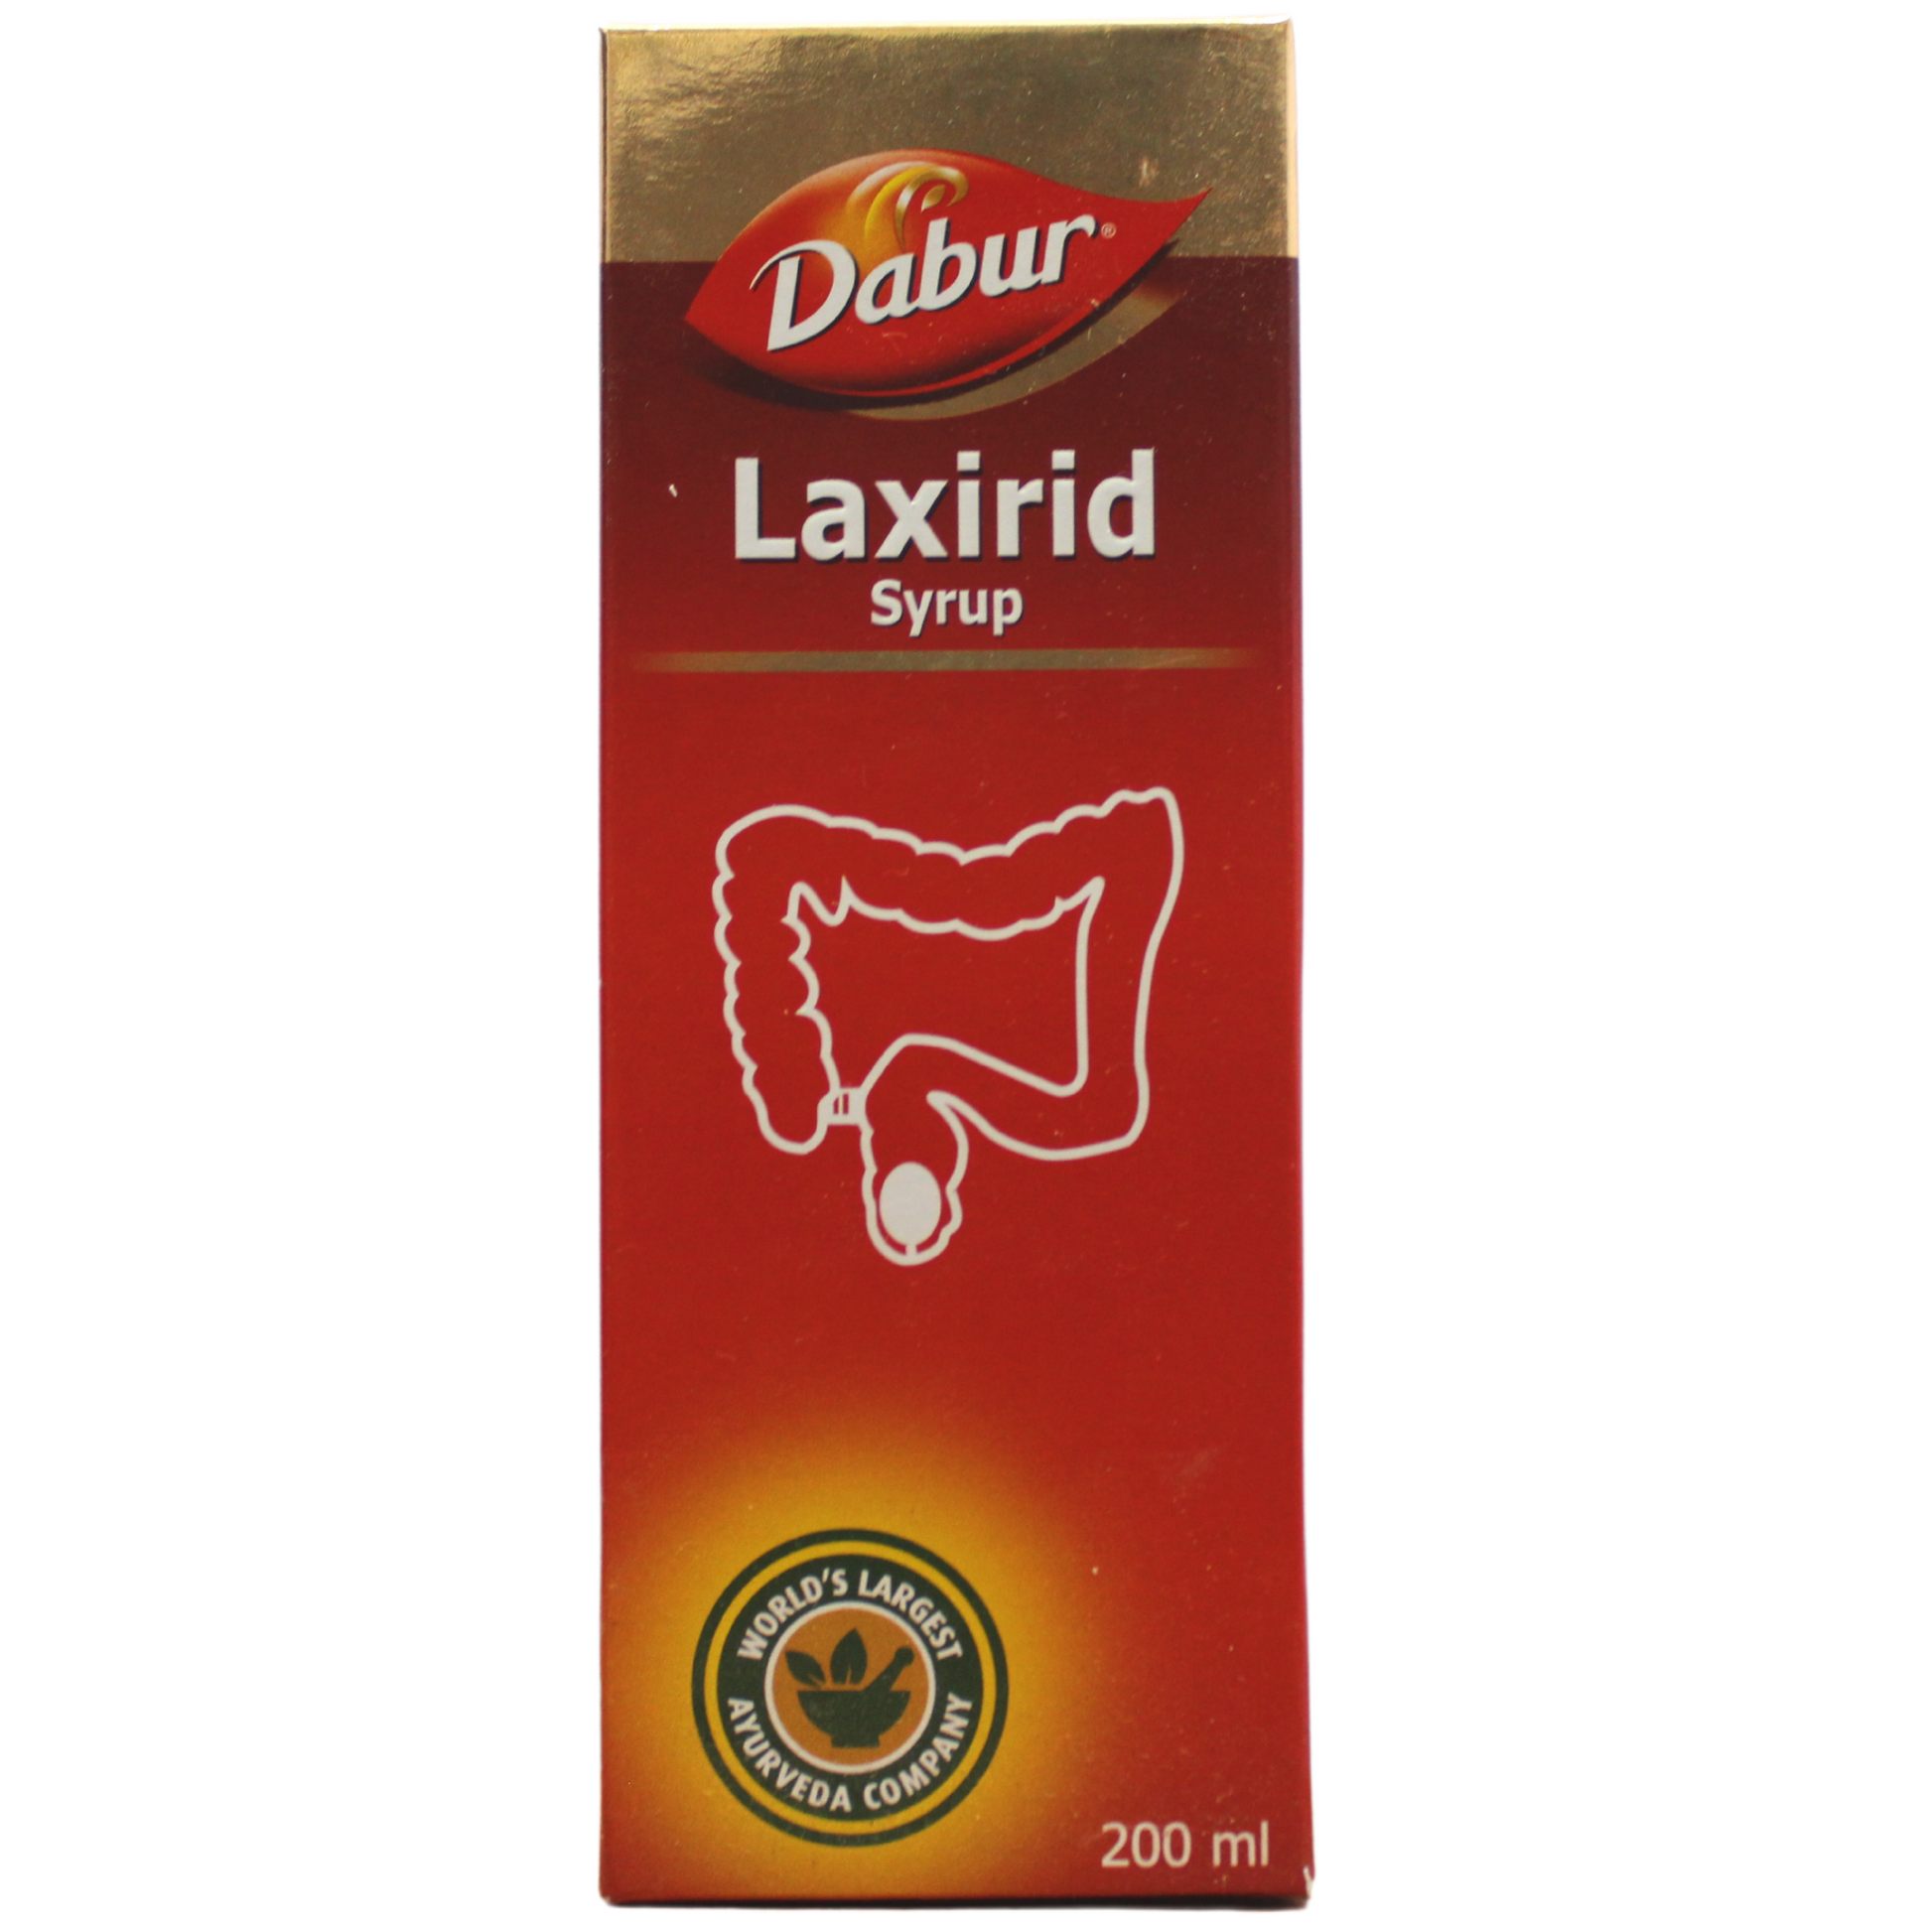 Dabur Laxirid syrup 200ml -  Dabur - Medizzo.com